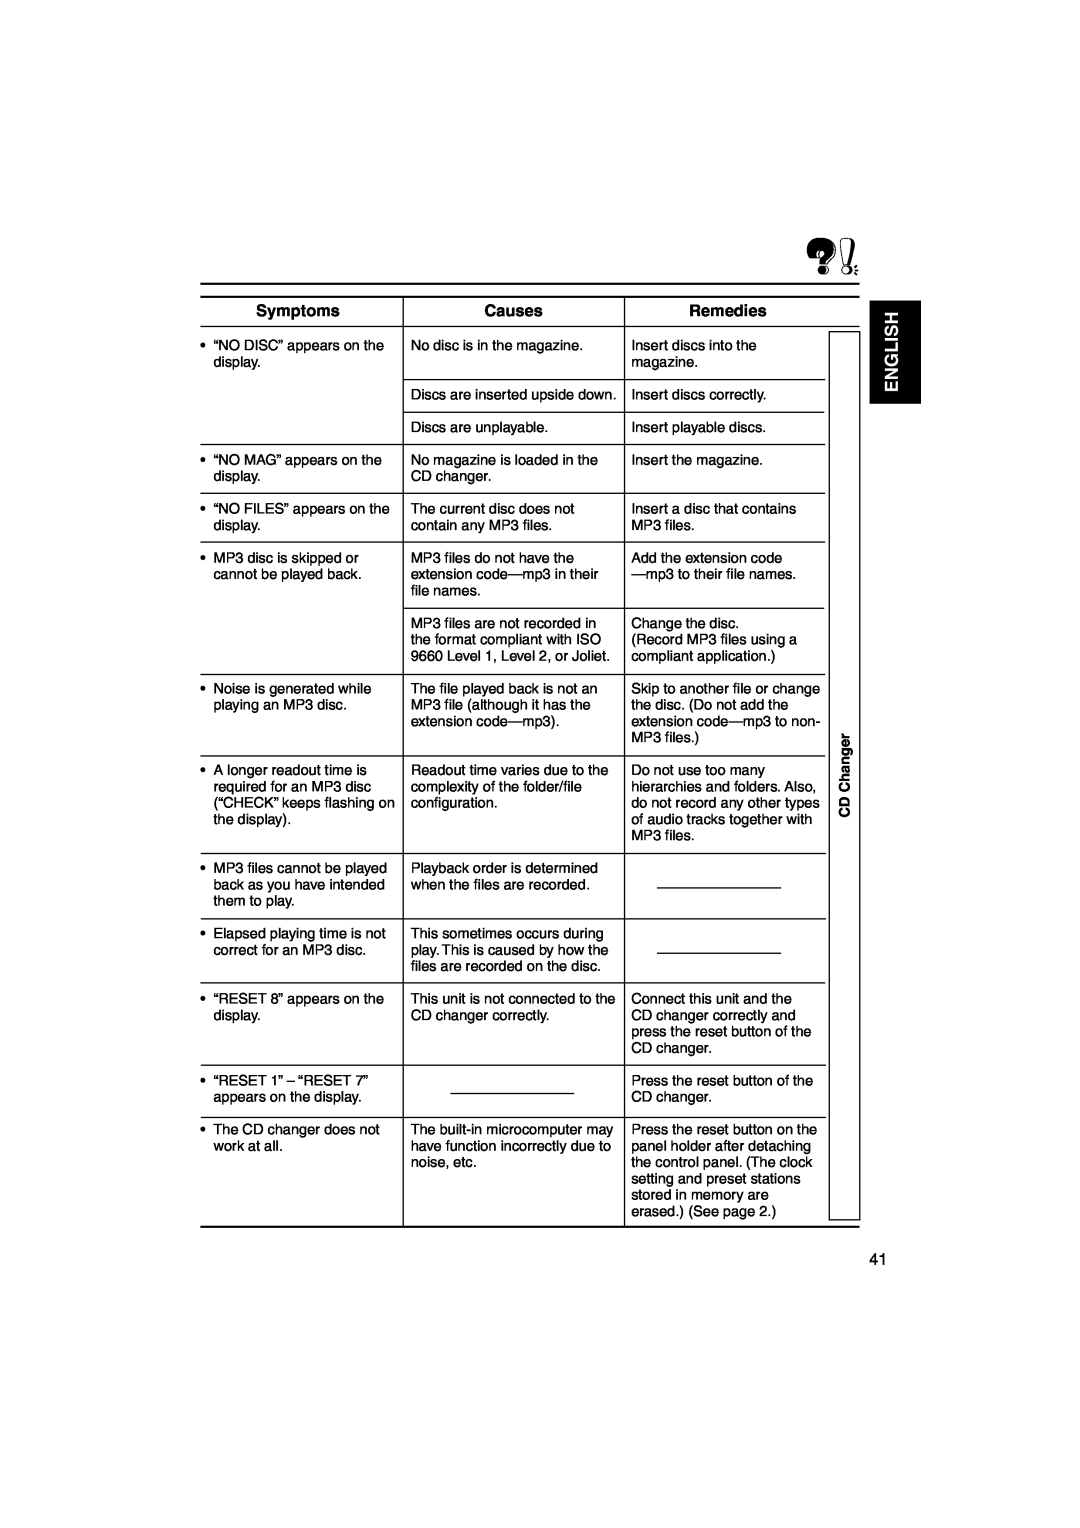 JVC KS-LH60R manual English, Symptoms, Causes, Remedies, Changer 